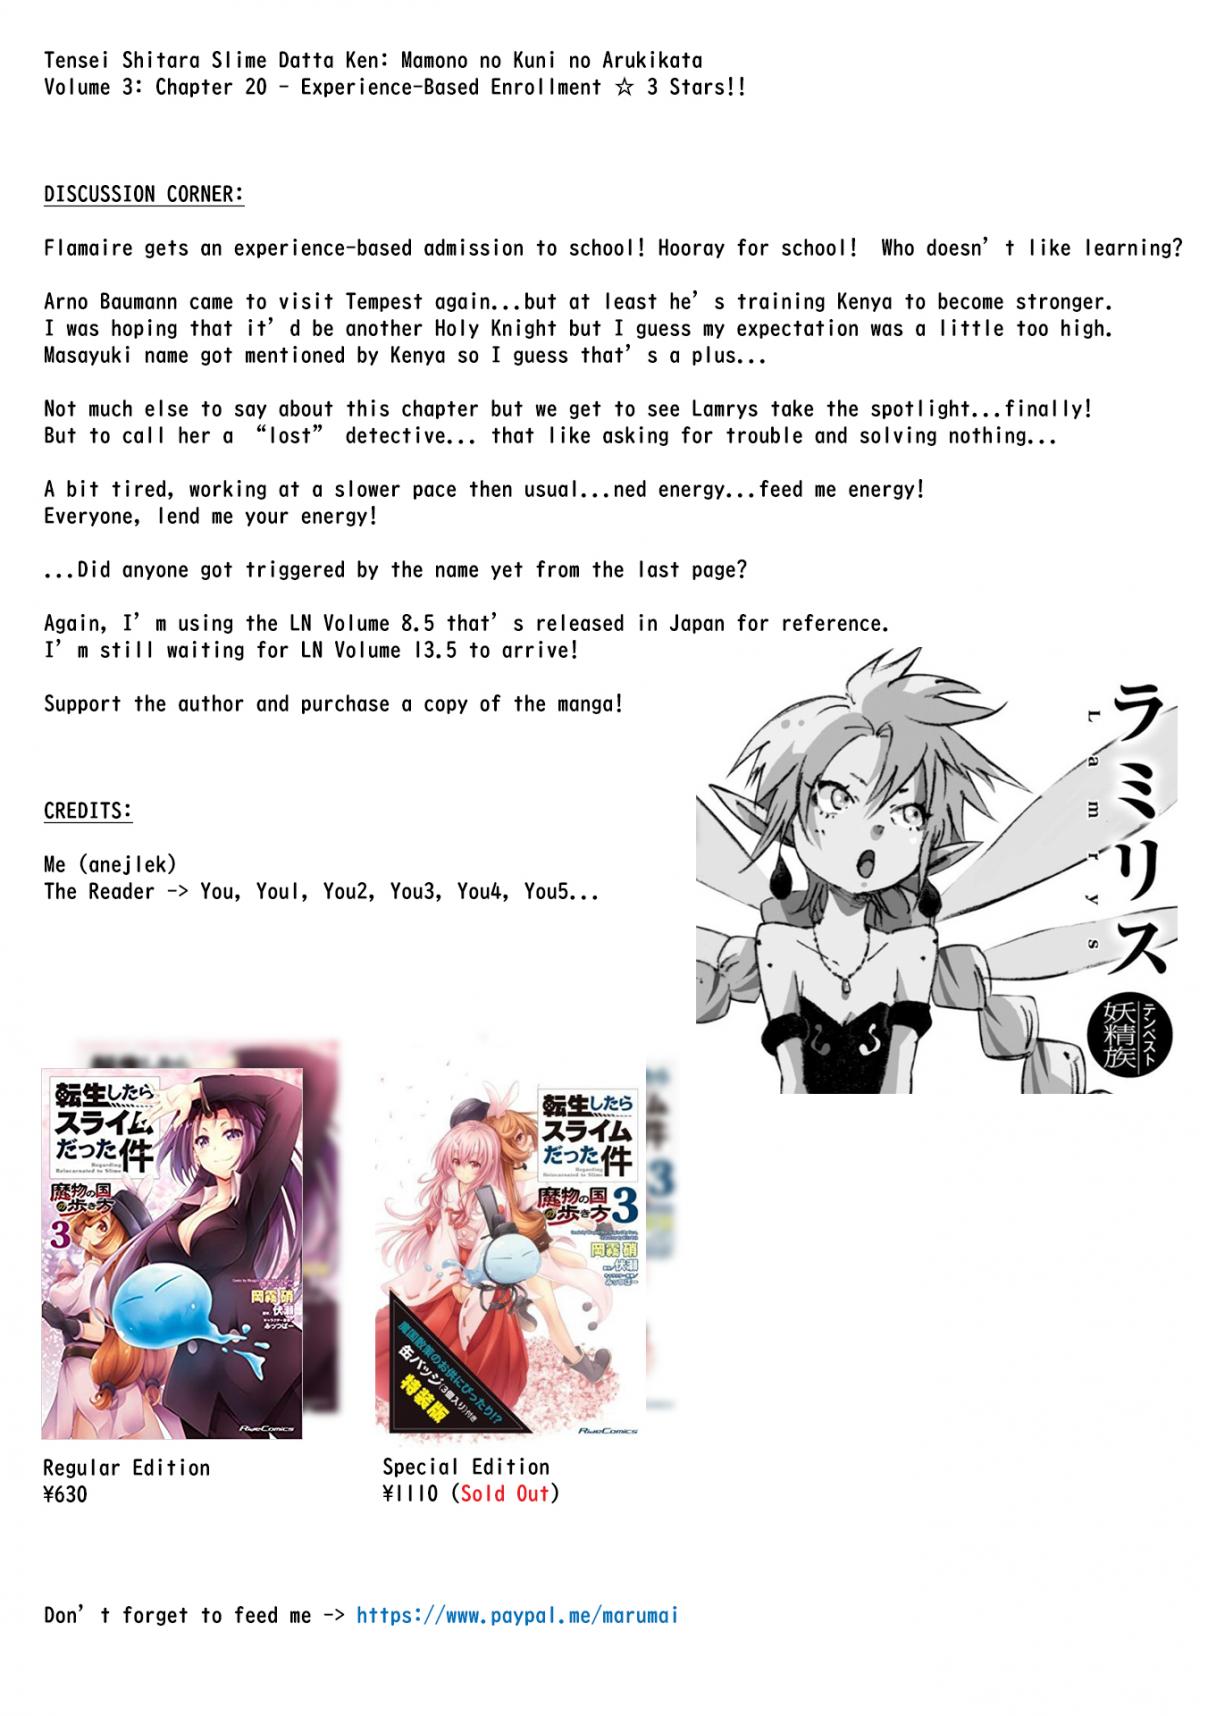 Tensei Shitara Slime Datta Ken: Mamono no Kuni no Arukikata Vol. 3 Ch. 20 Experience Based Enrollment ☆ 3 Stars!!